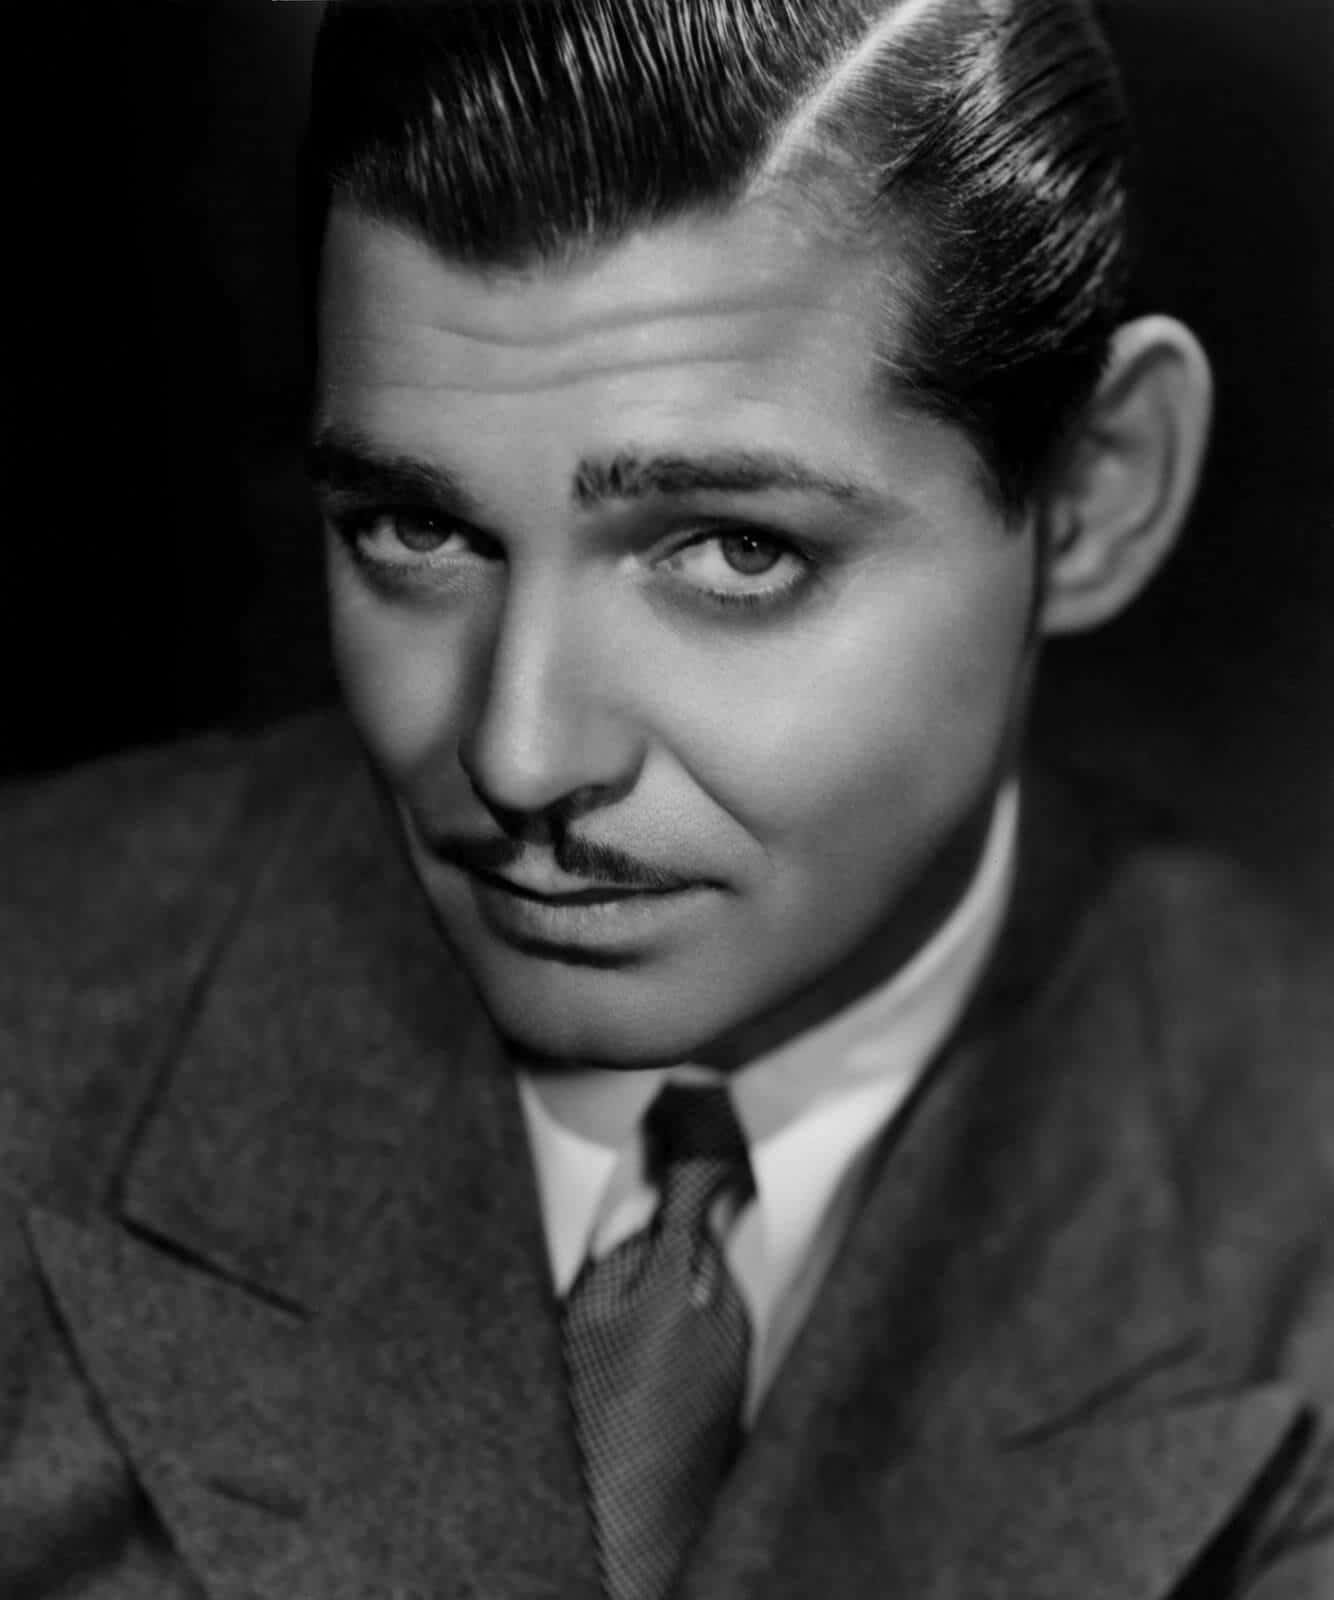 Clark Gable smiling Portrait In Suit Tie And Moustache High Quality Photo ... 